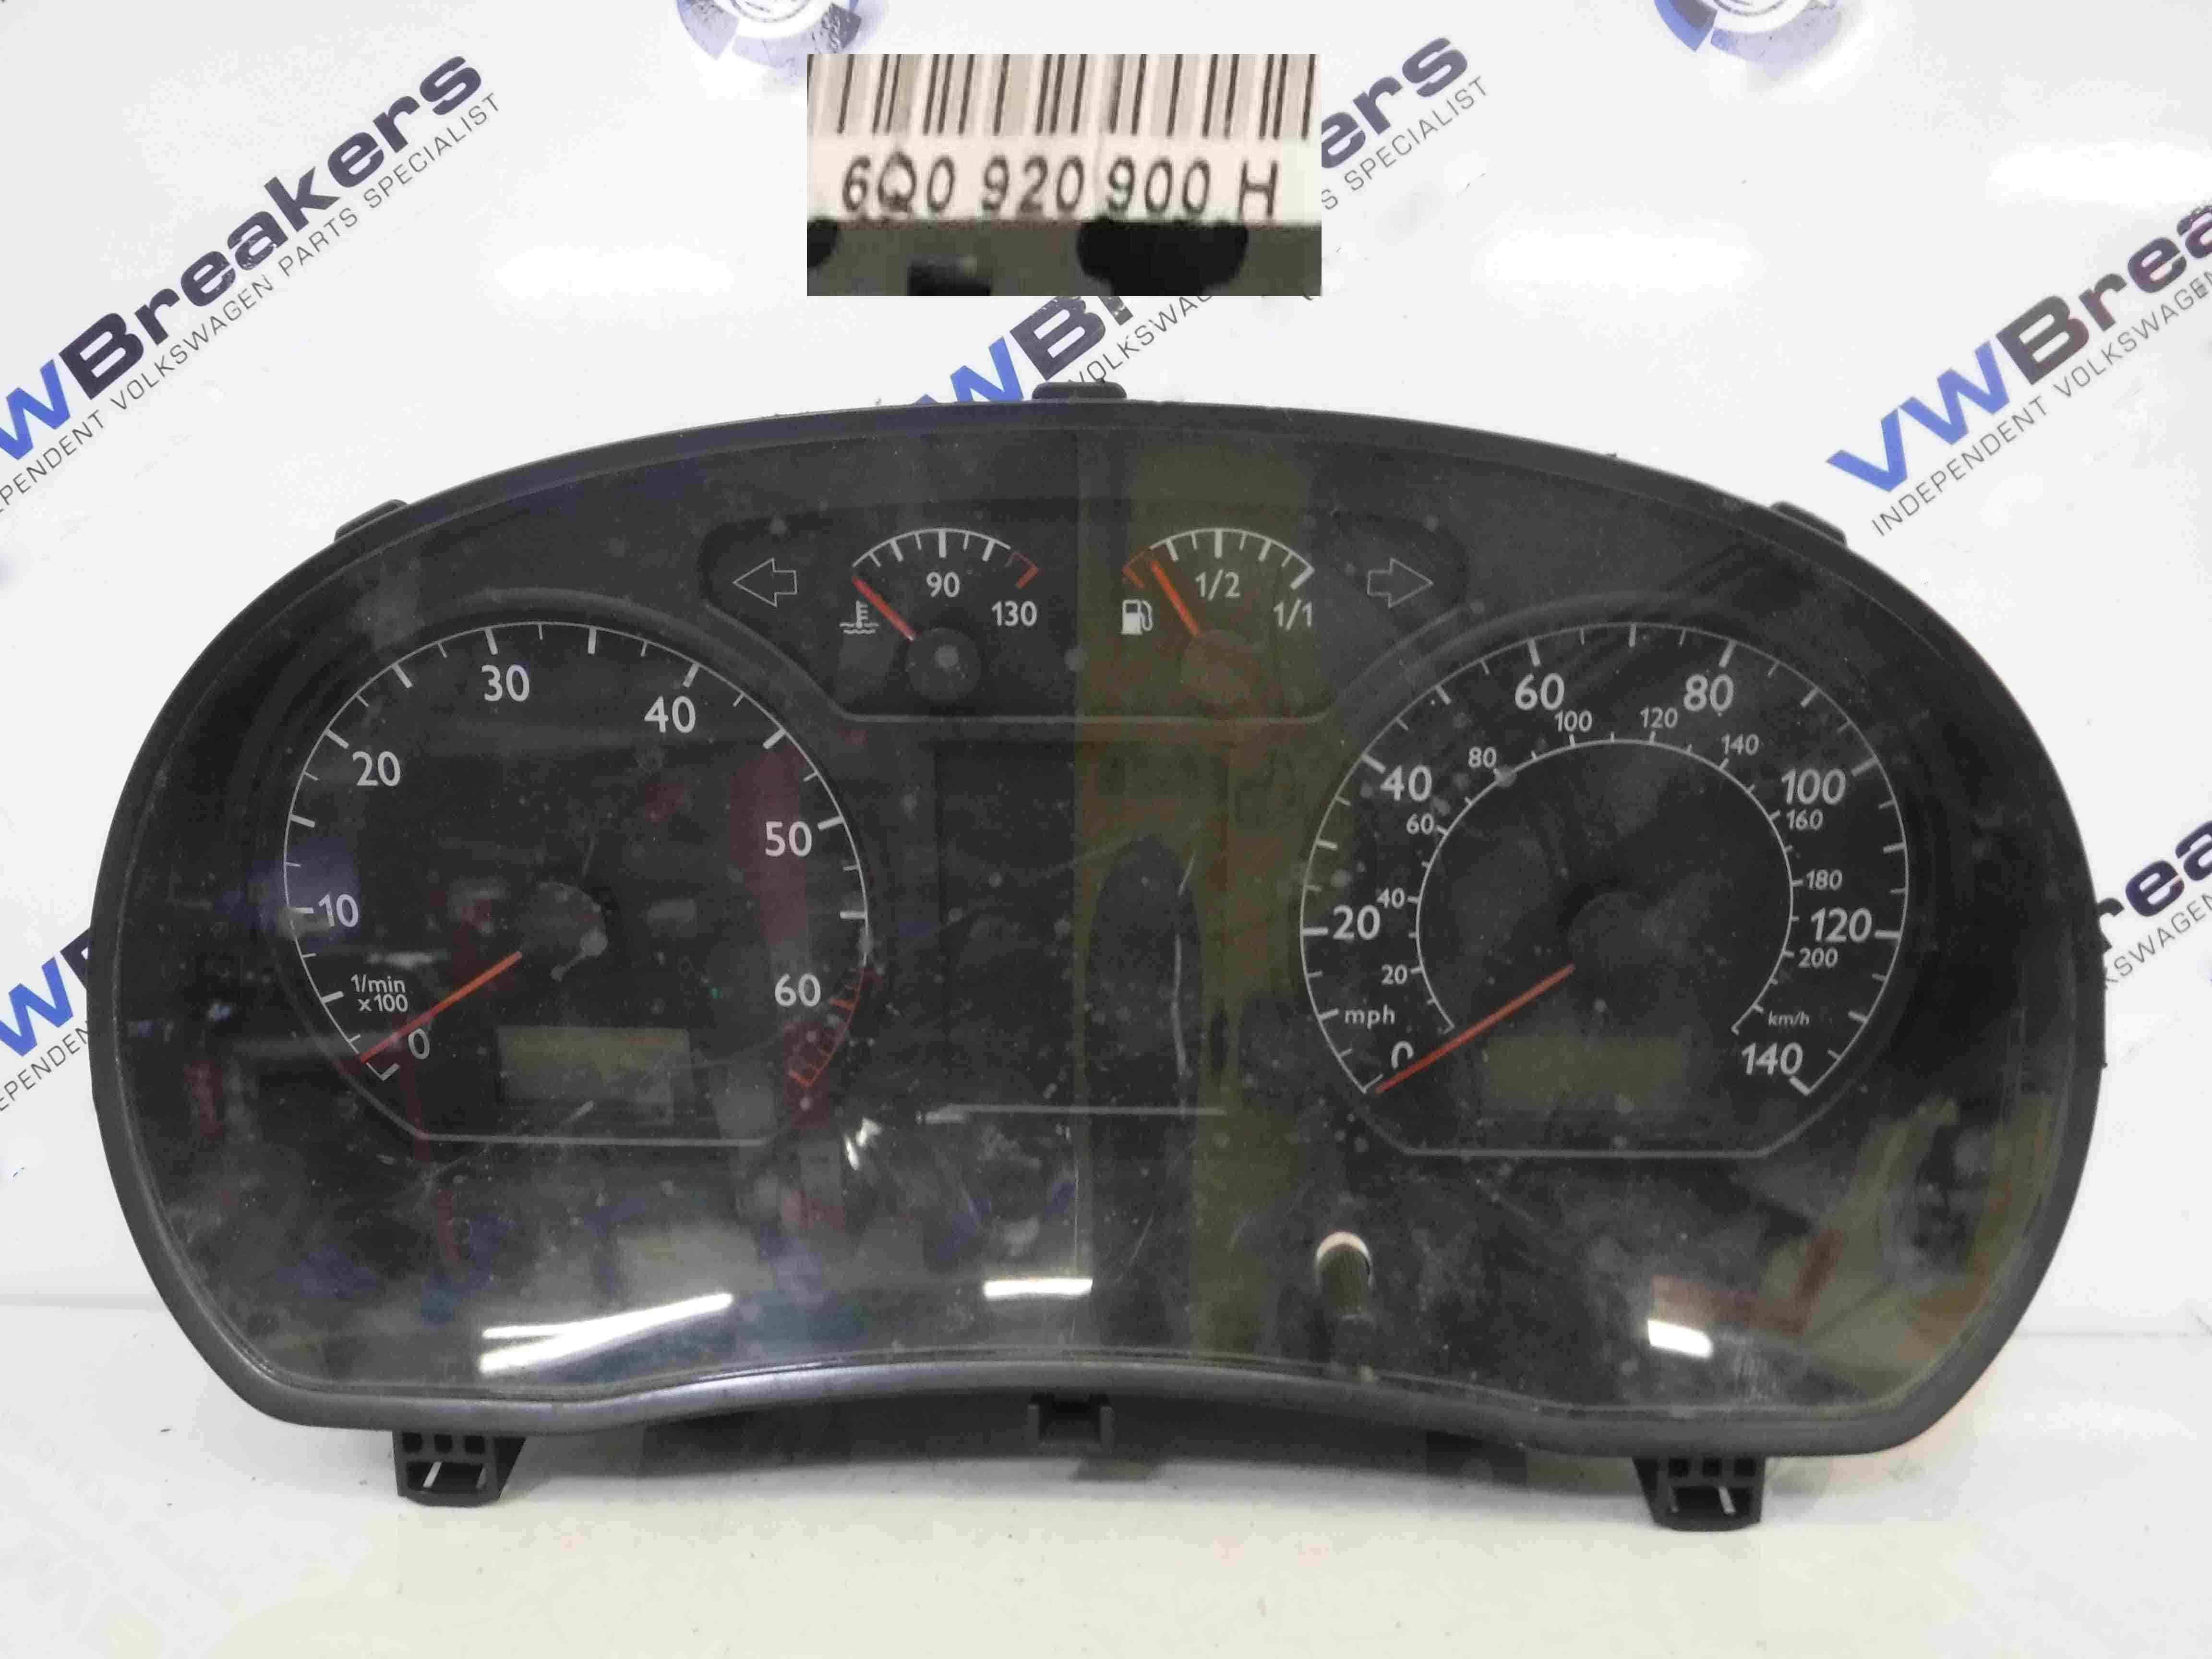 Volkswagen Polo 2003-2006 9N Instrument Panel Dials Clocks Speedo  6Q0920900h